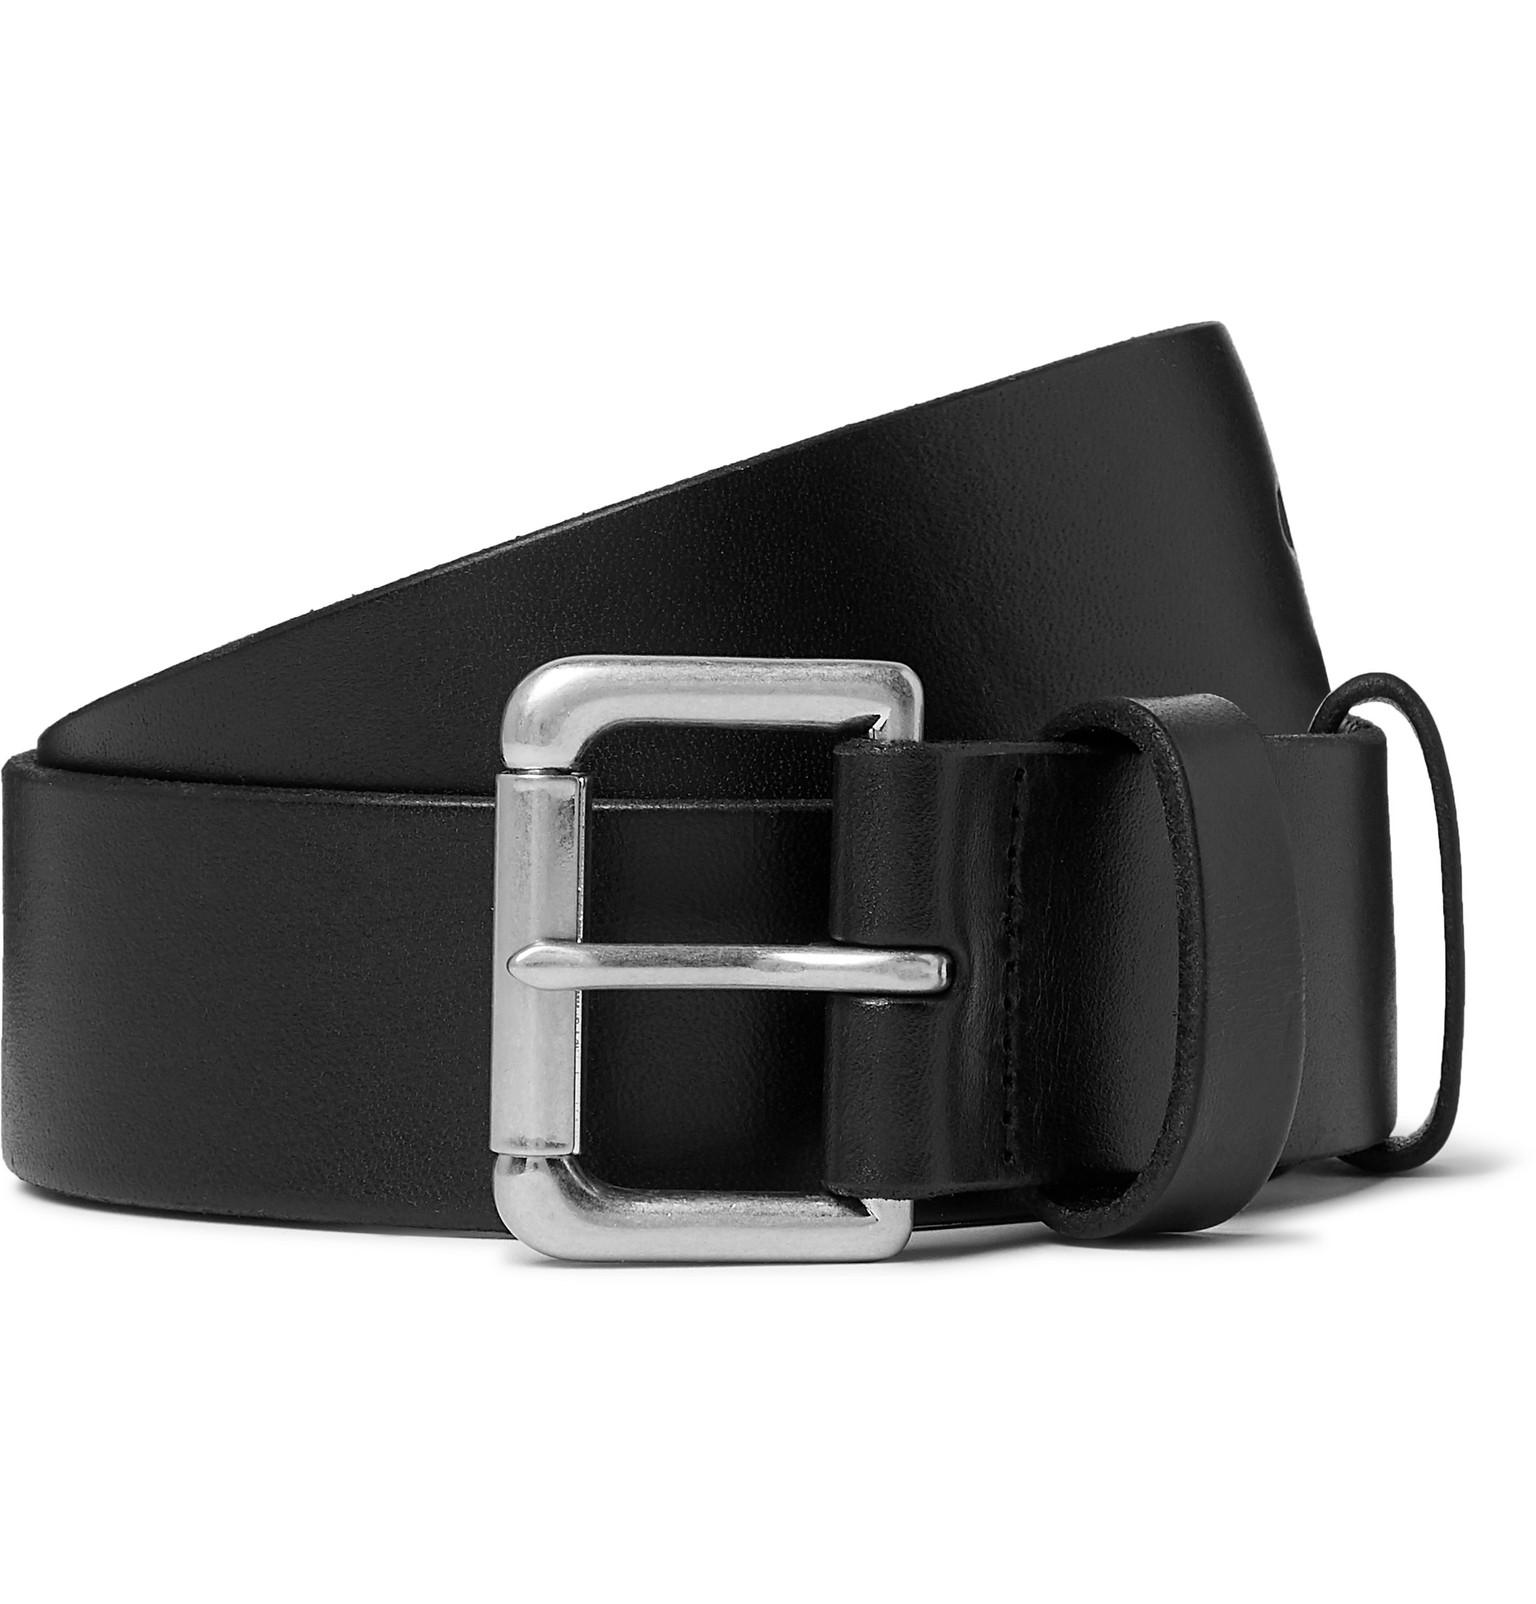 Polo Ralph Lauren 4cm Leather Belt in Black for Men - Lyst